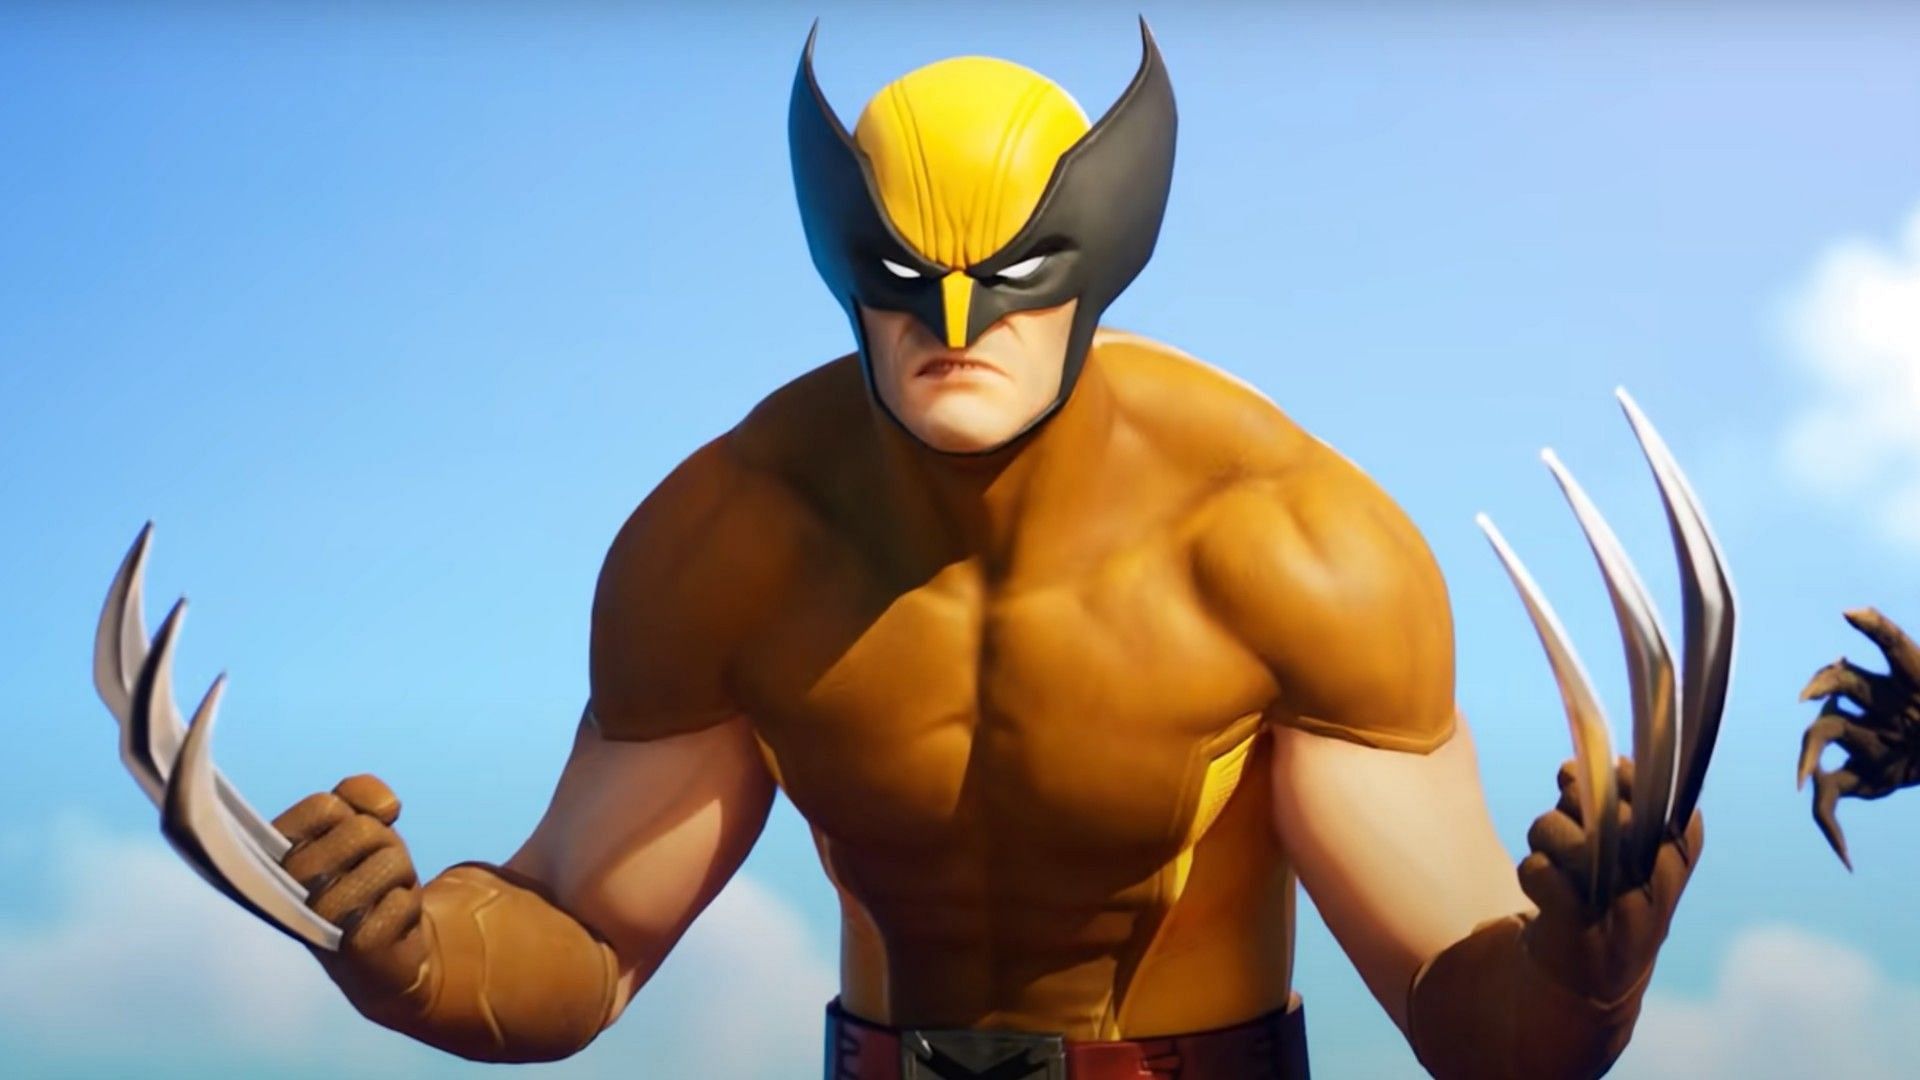 Battle pass exclusive Wolverine (Image via Epic Games)